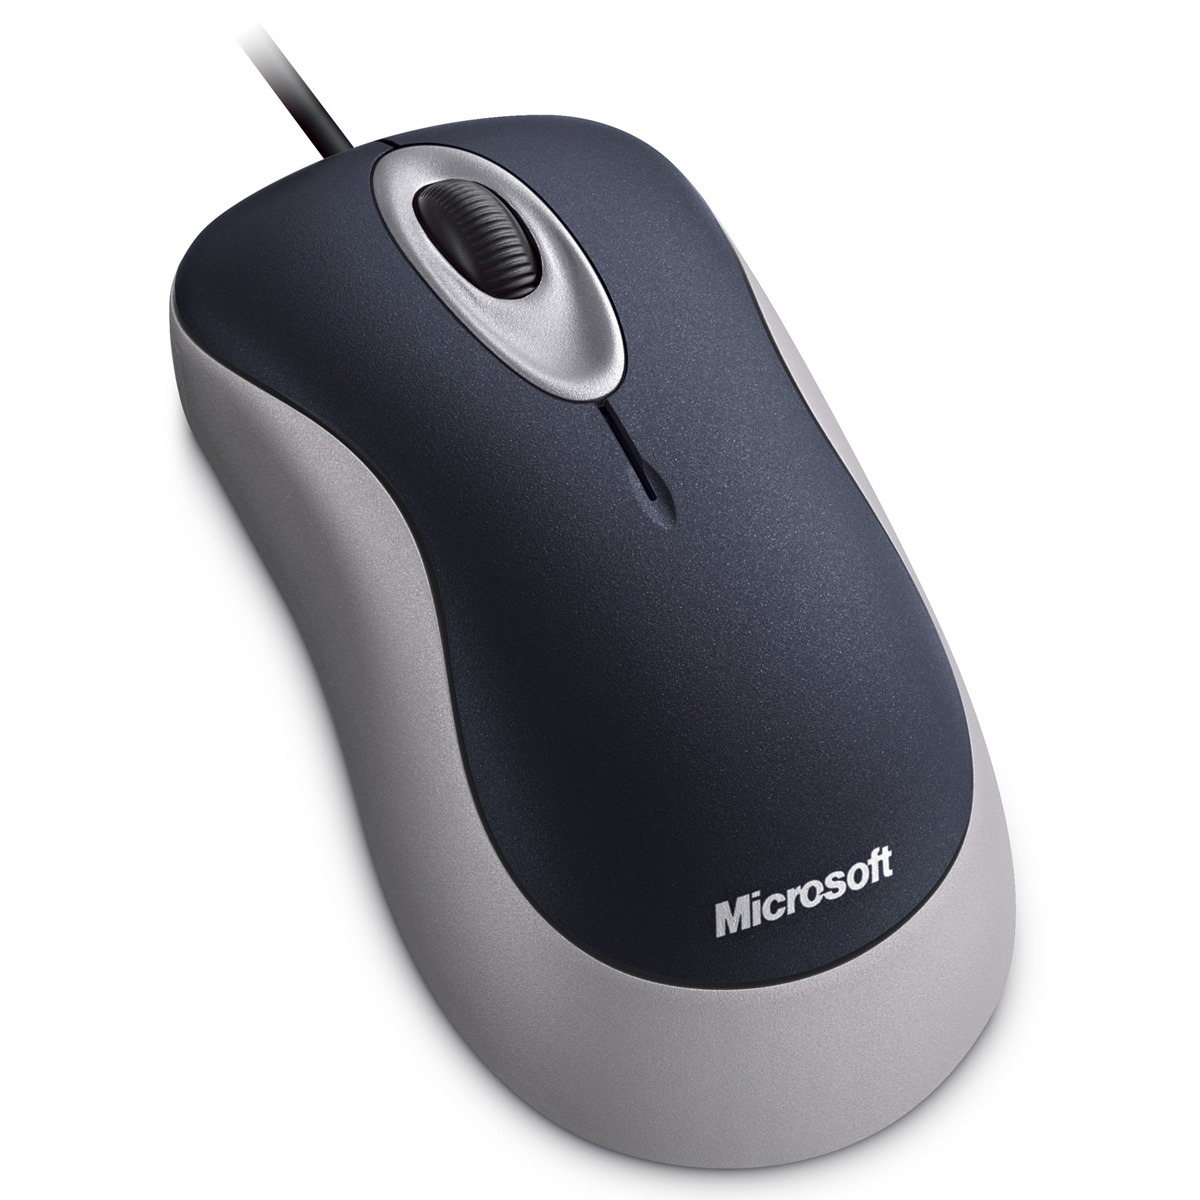 Microsoft Comfort Optical Mouse 1000 - Souris PC Microsoft ...